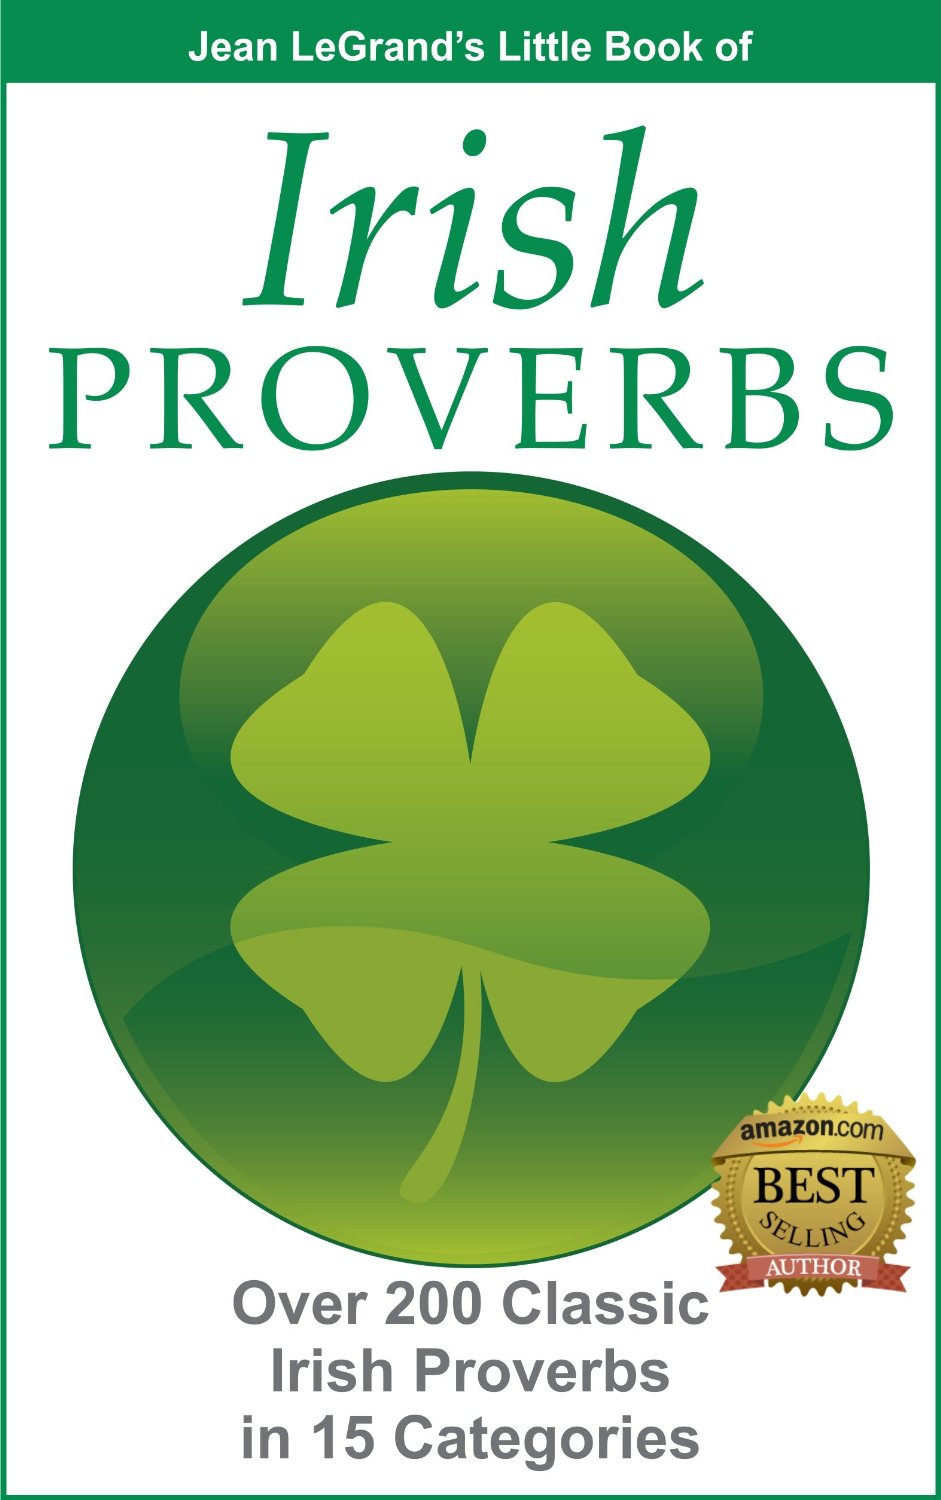 IRISH PROVERBS – Over 200 Insightful Irish Proverbs in 15 Categories by Jean LeGrand